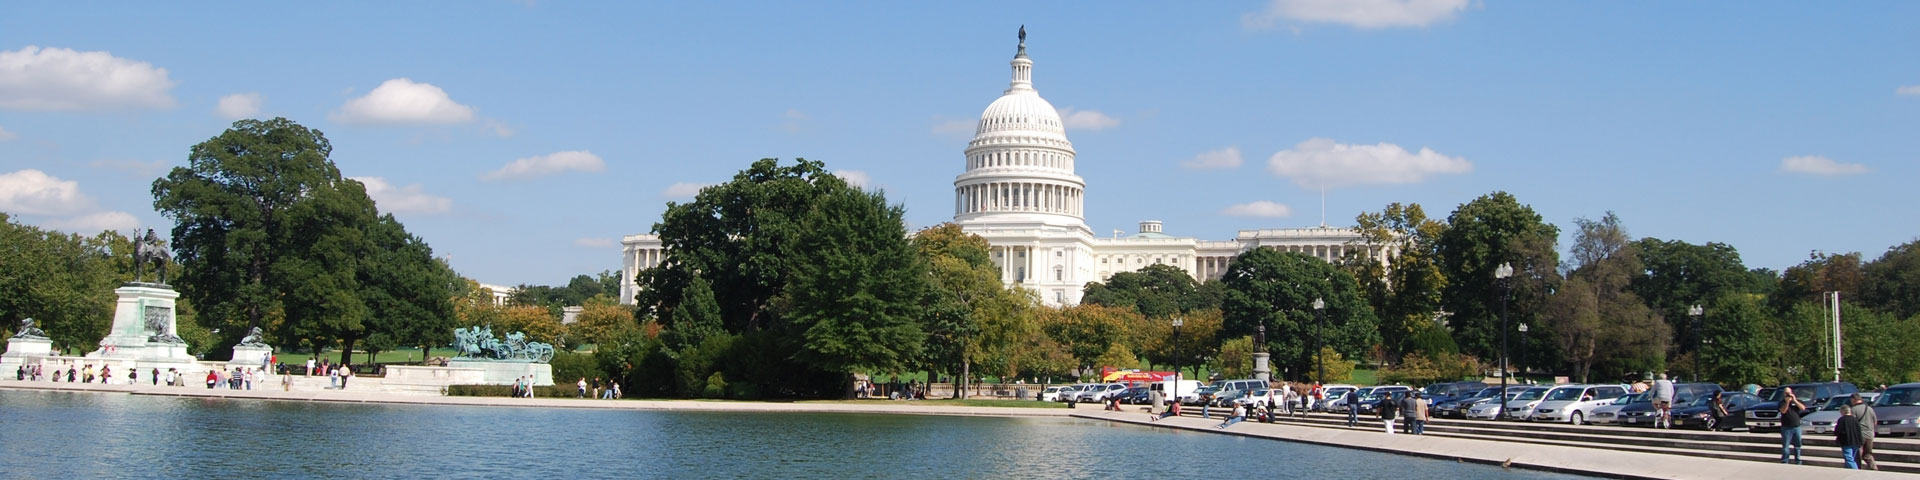 Capitol Hill i Washington, USA